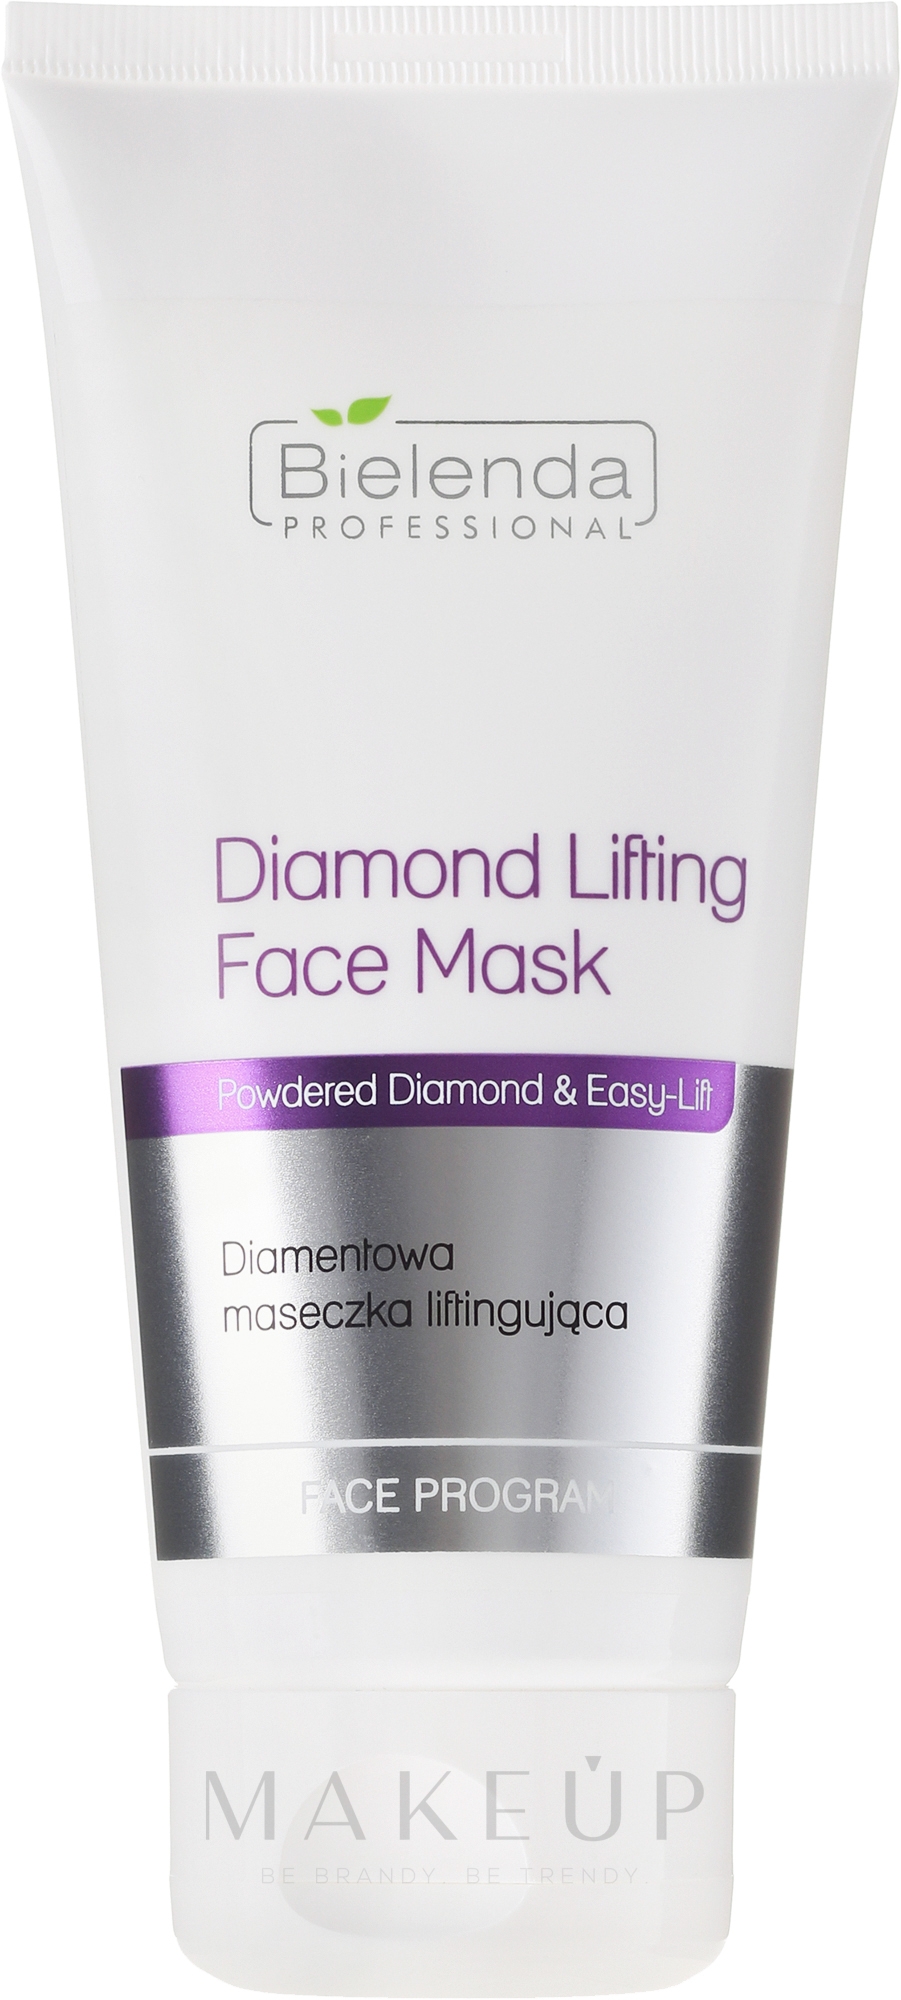 Gesichtsmaske mit Lifting-Effekt - Bielenda Professional Face Program Diamond Lifting Face Mask — Bild 175 ml